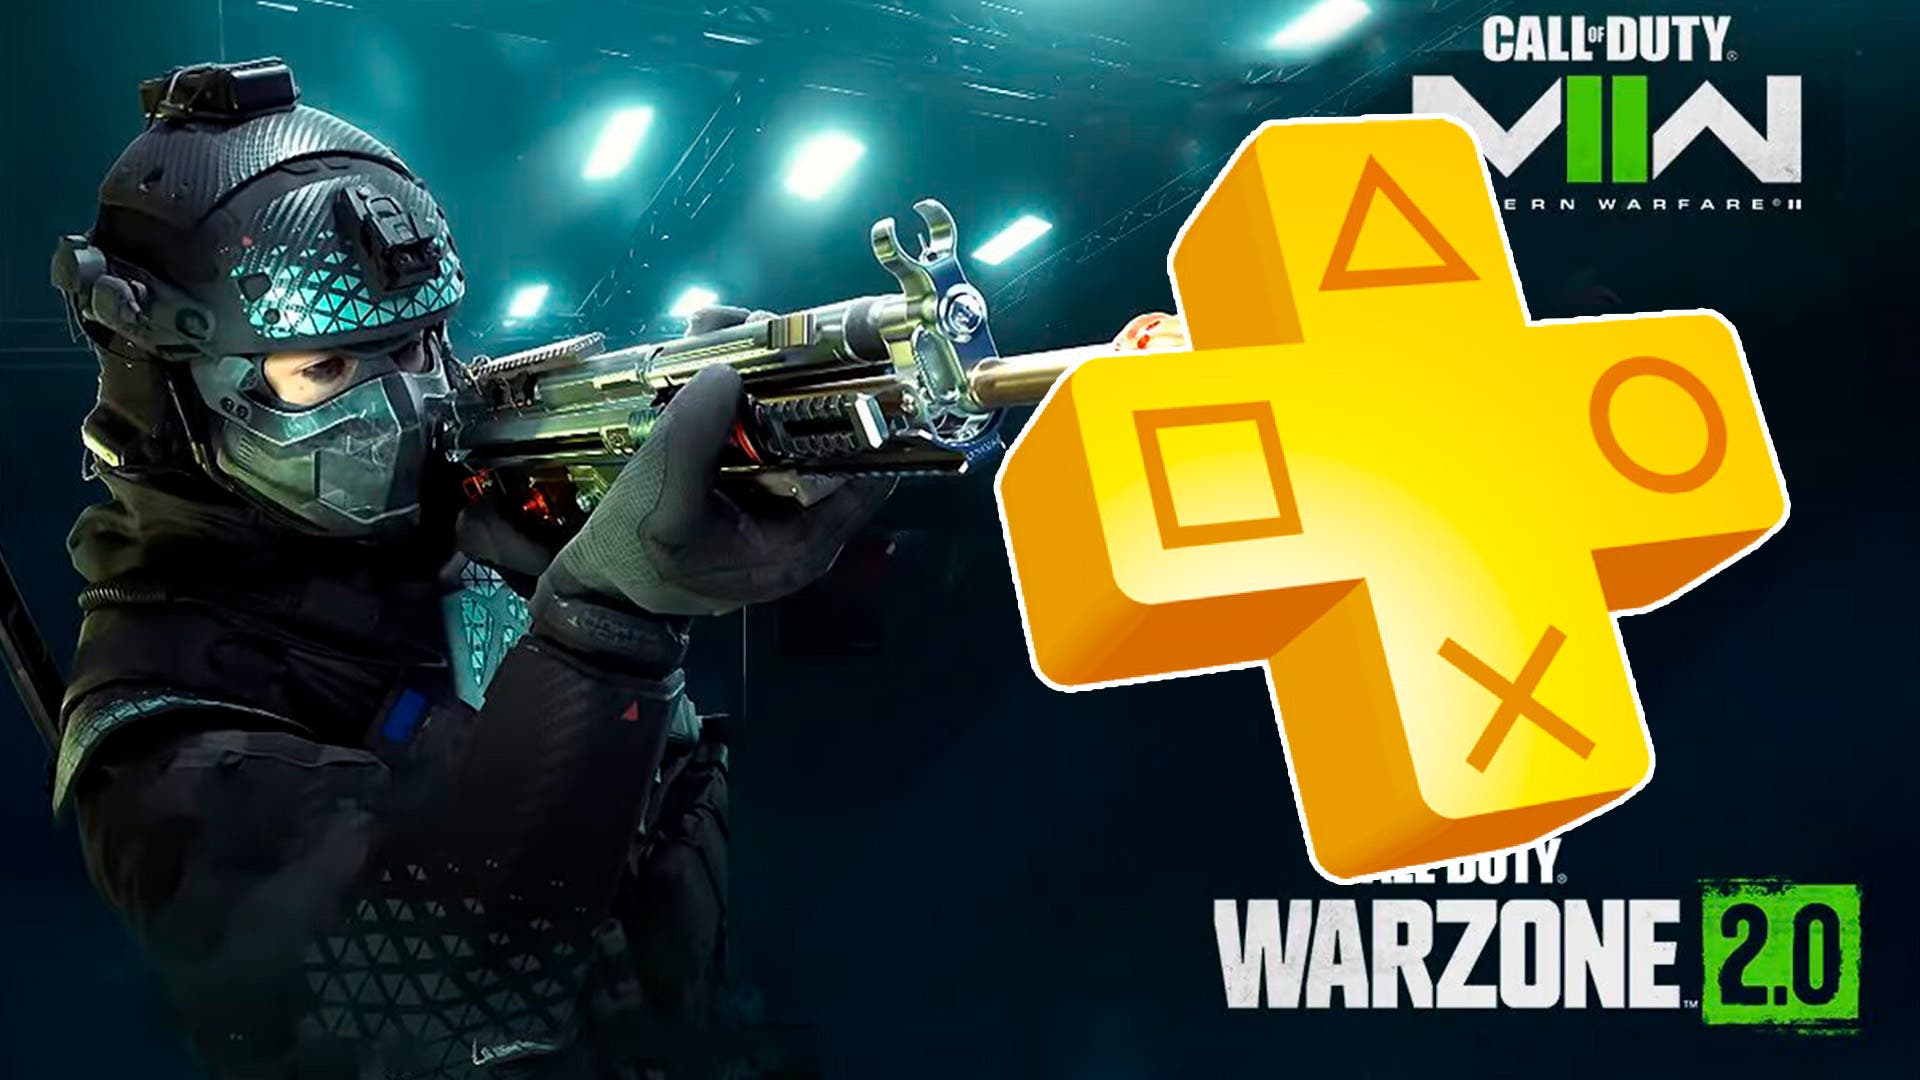 Warzone 2.0: pack disponível de graça para membros PS Plus